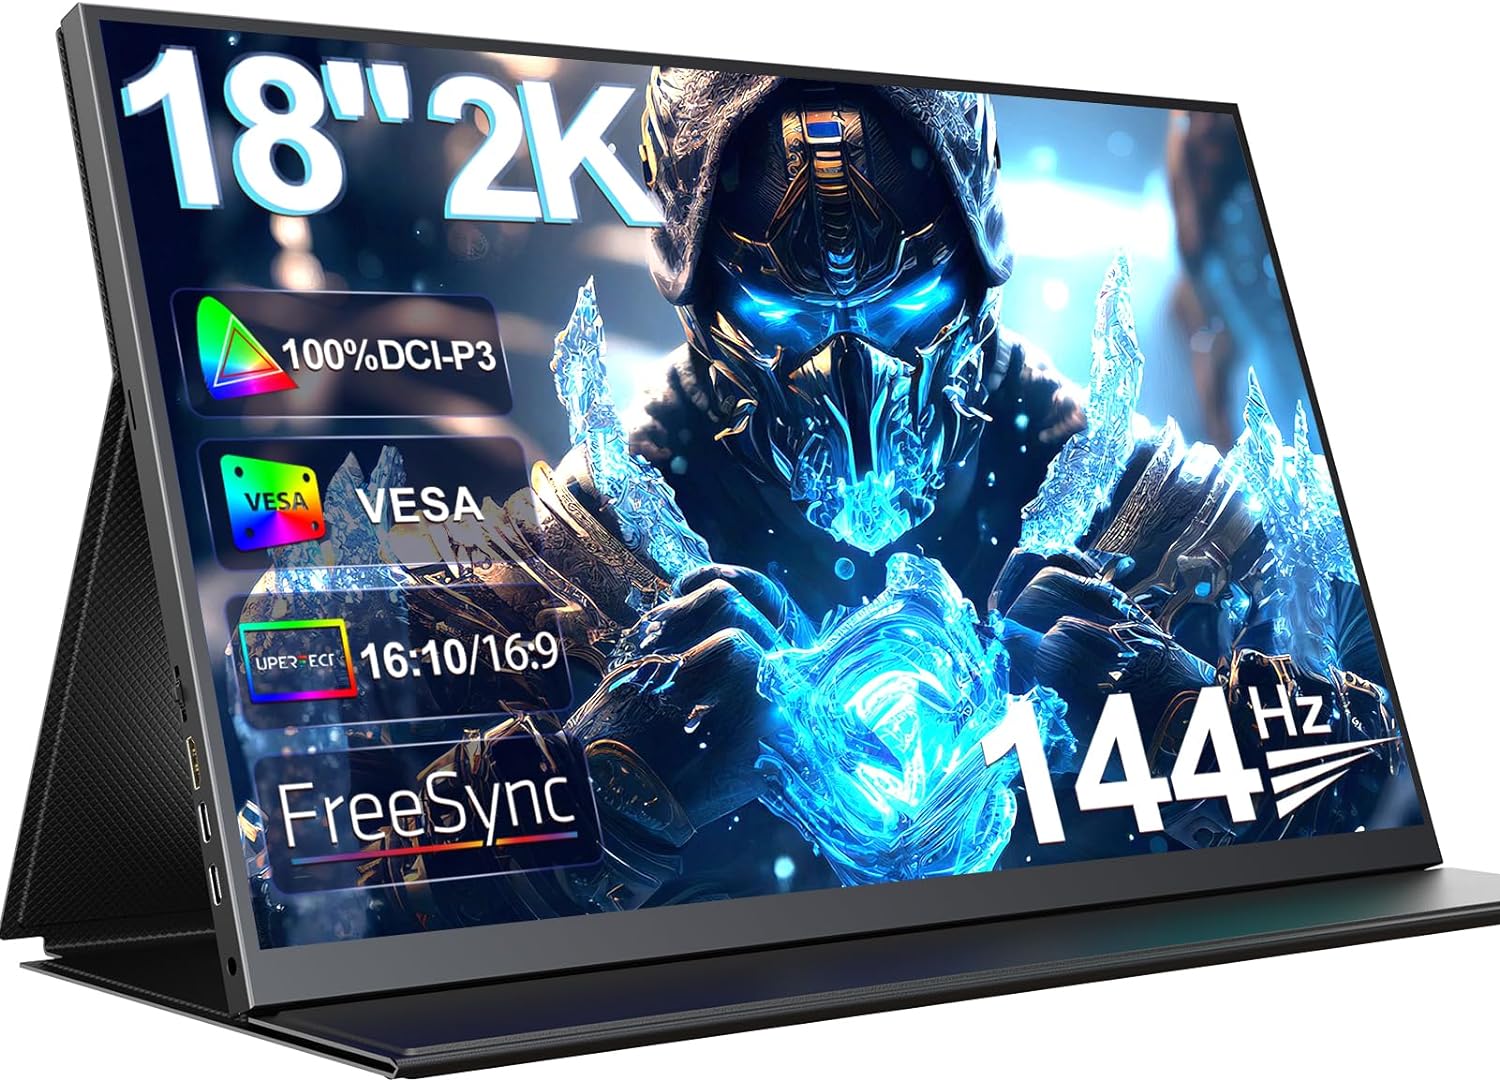 Best Portable Monitor 2024 [Buying Guide] - Display Ninja